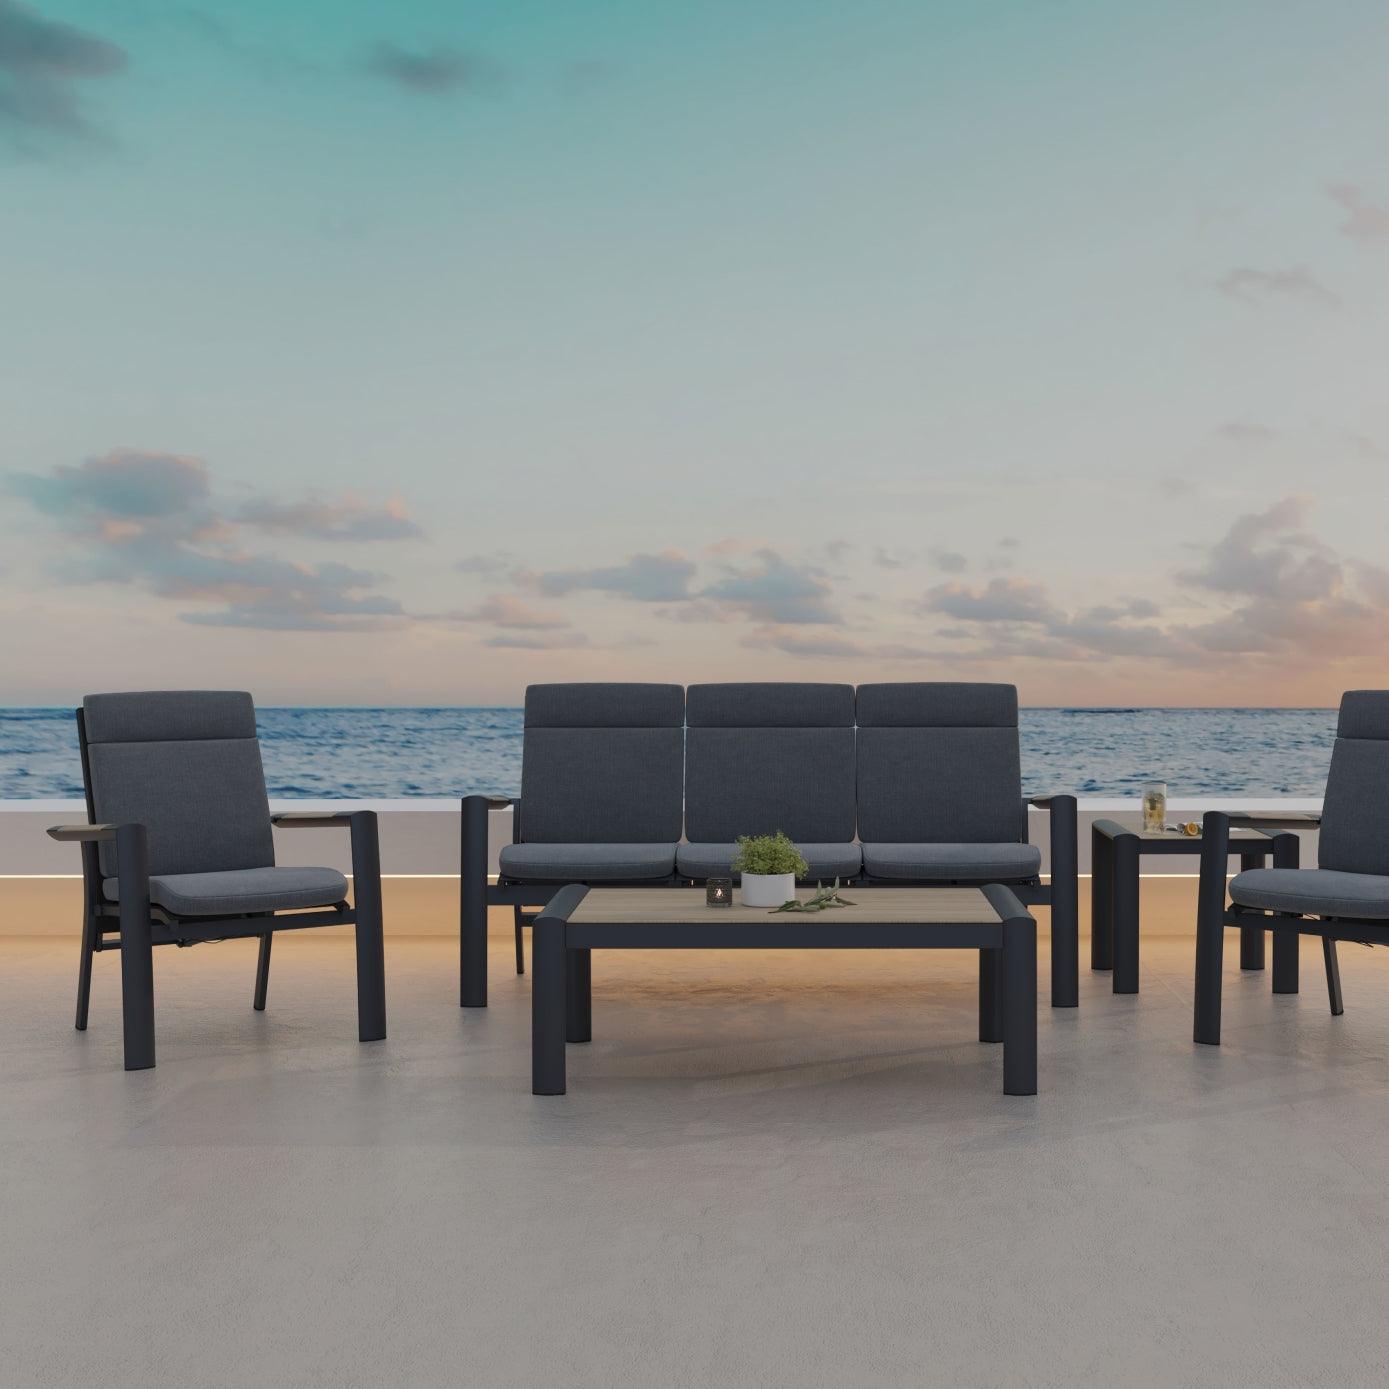 Capri Collection Furniture, All-aluminum with Adjustable Backrest and Teakwood Armrest Design - Jardina European & Modern Outdoor Patio Furniture